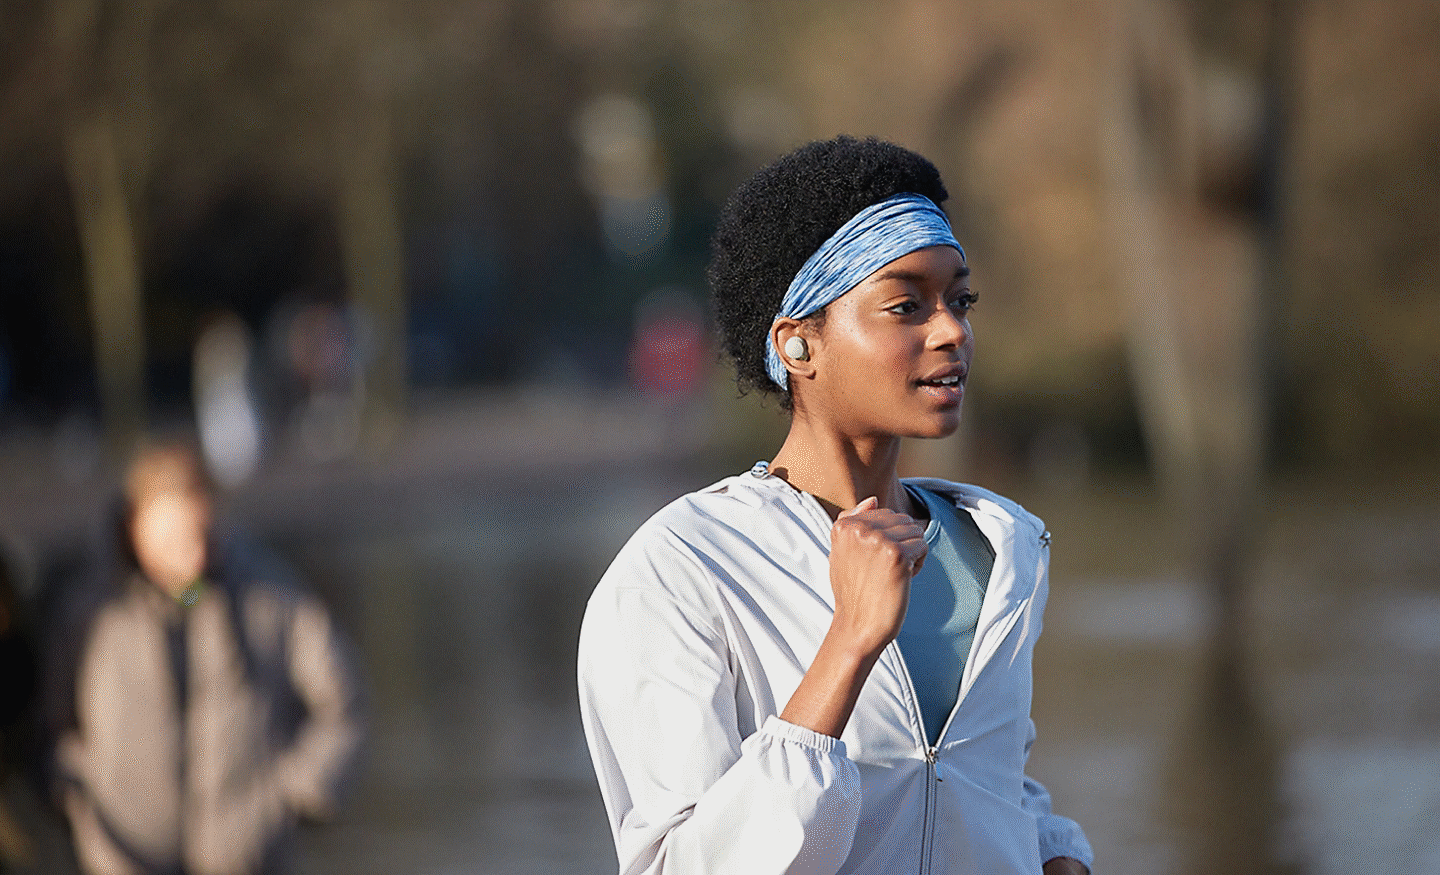 A woman running outdoors wearing WF-1000XM4 headphones